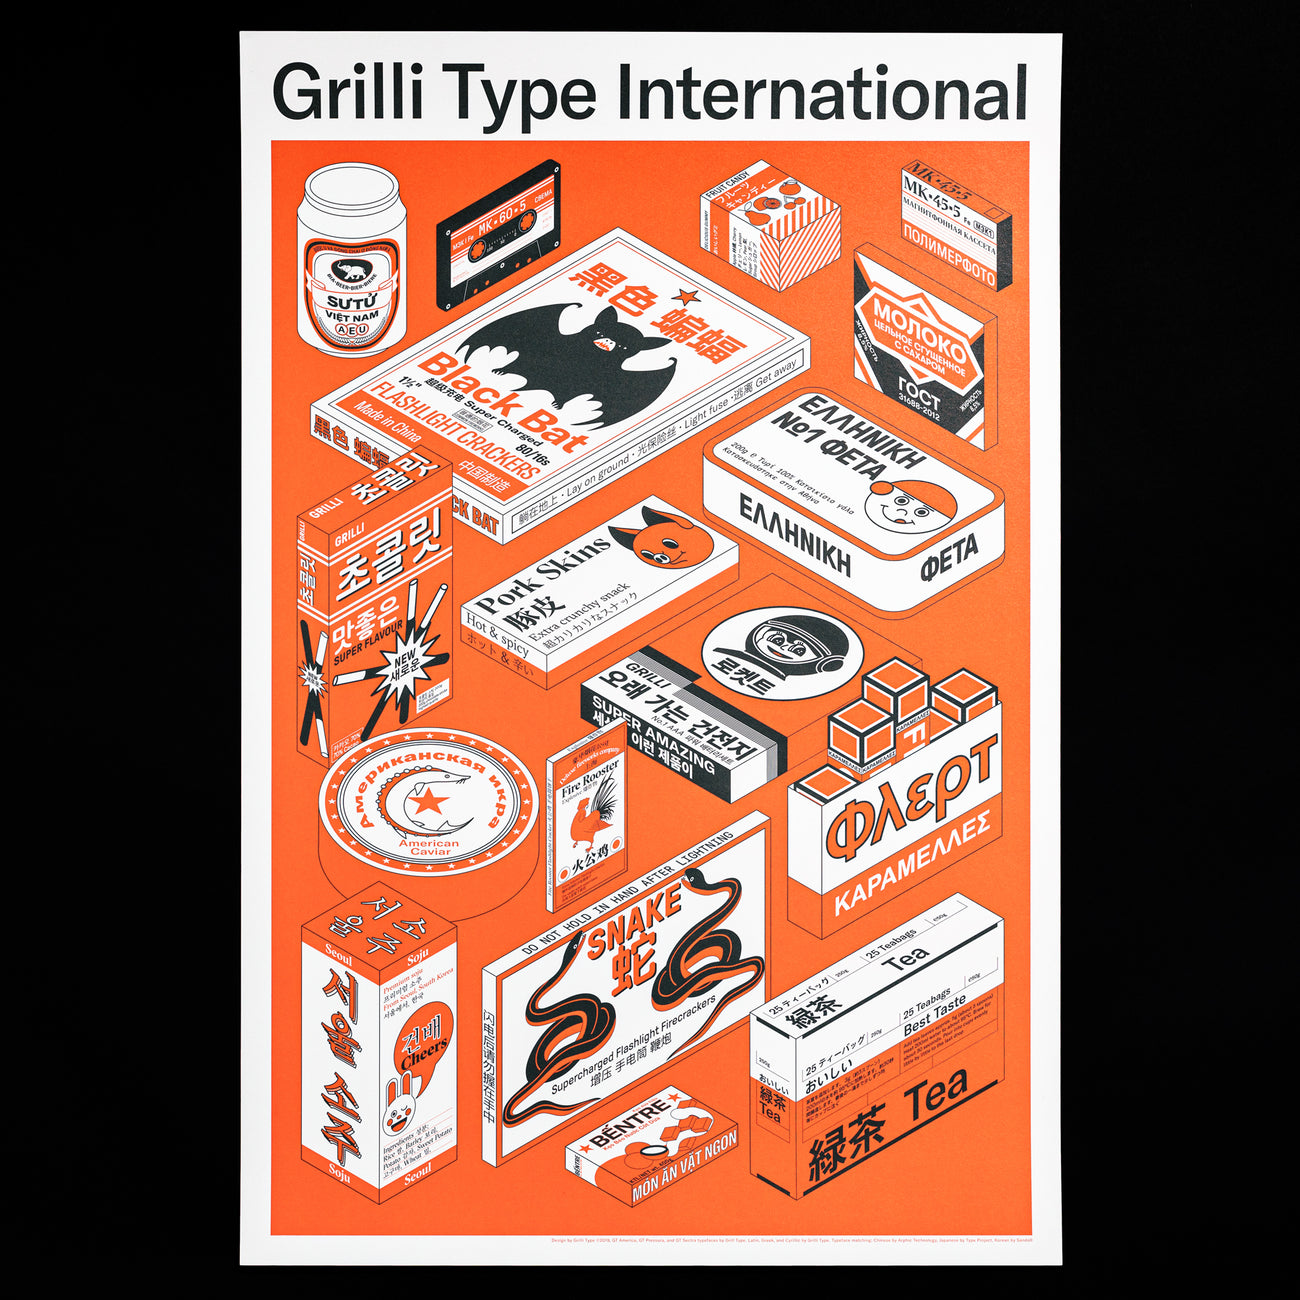 Grilli Type International